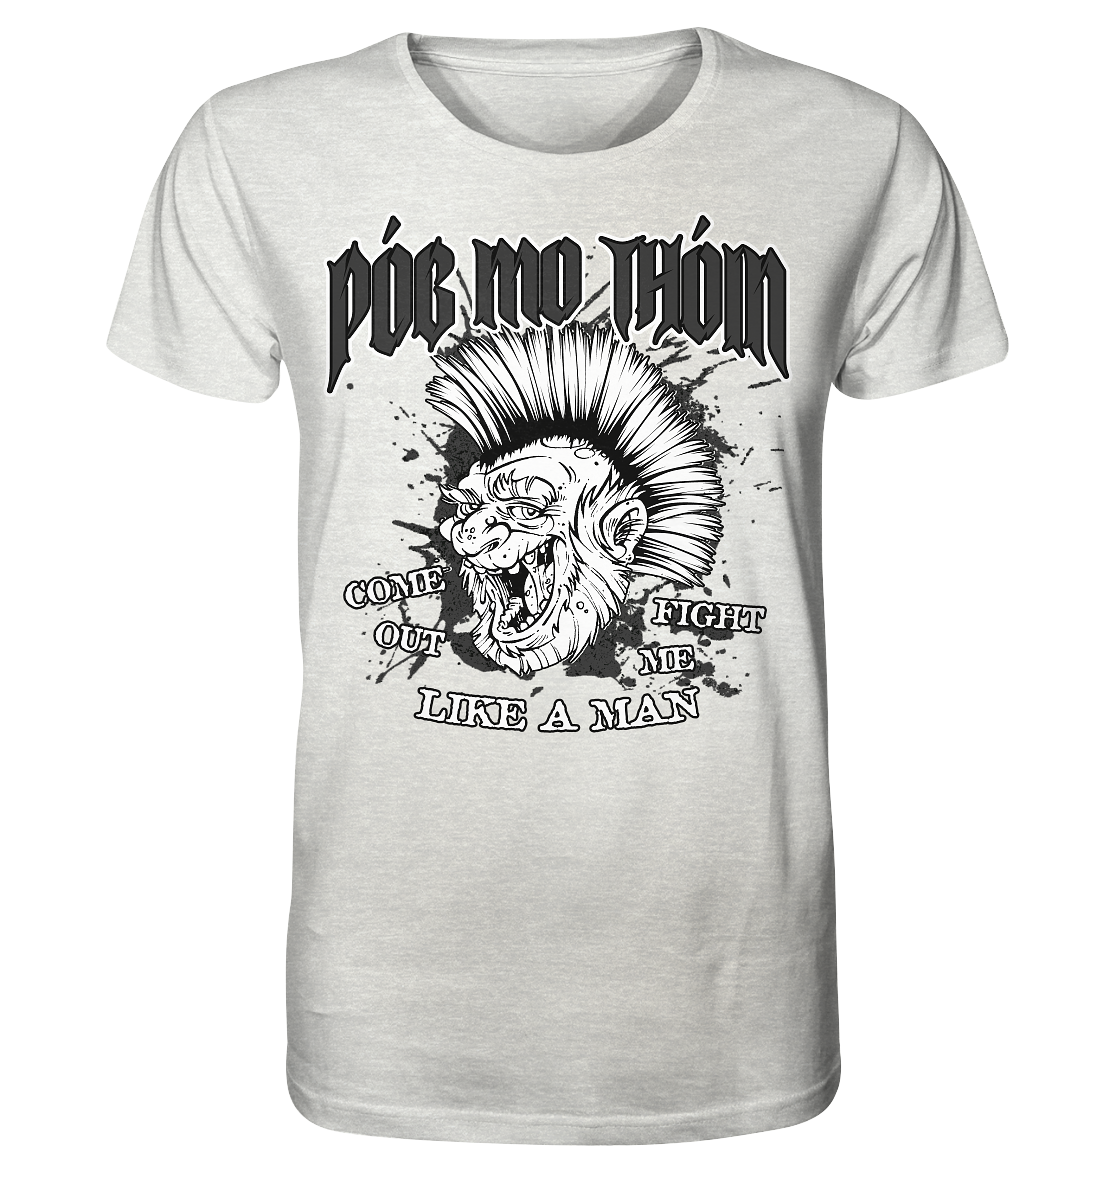 Póg Mo Thóin Streetwear "Come Out" - Organic Shirt (meliert)